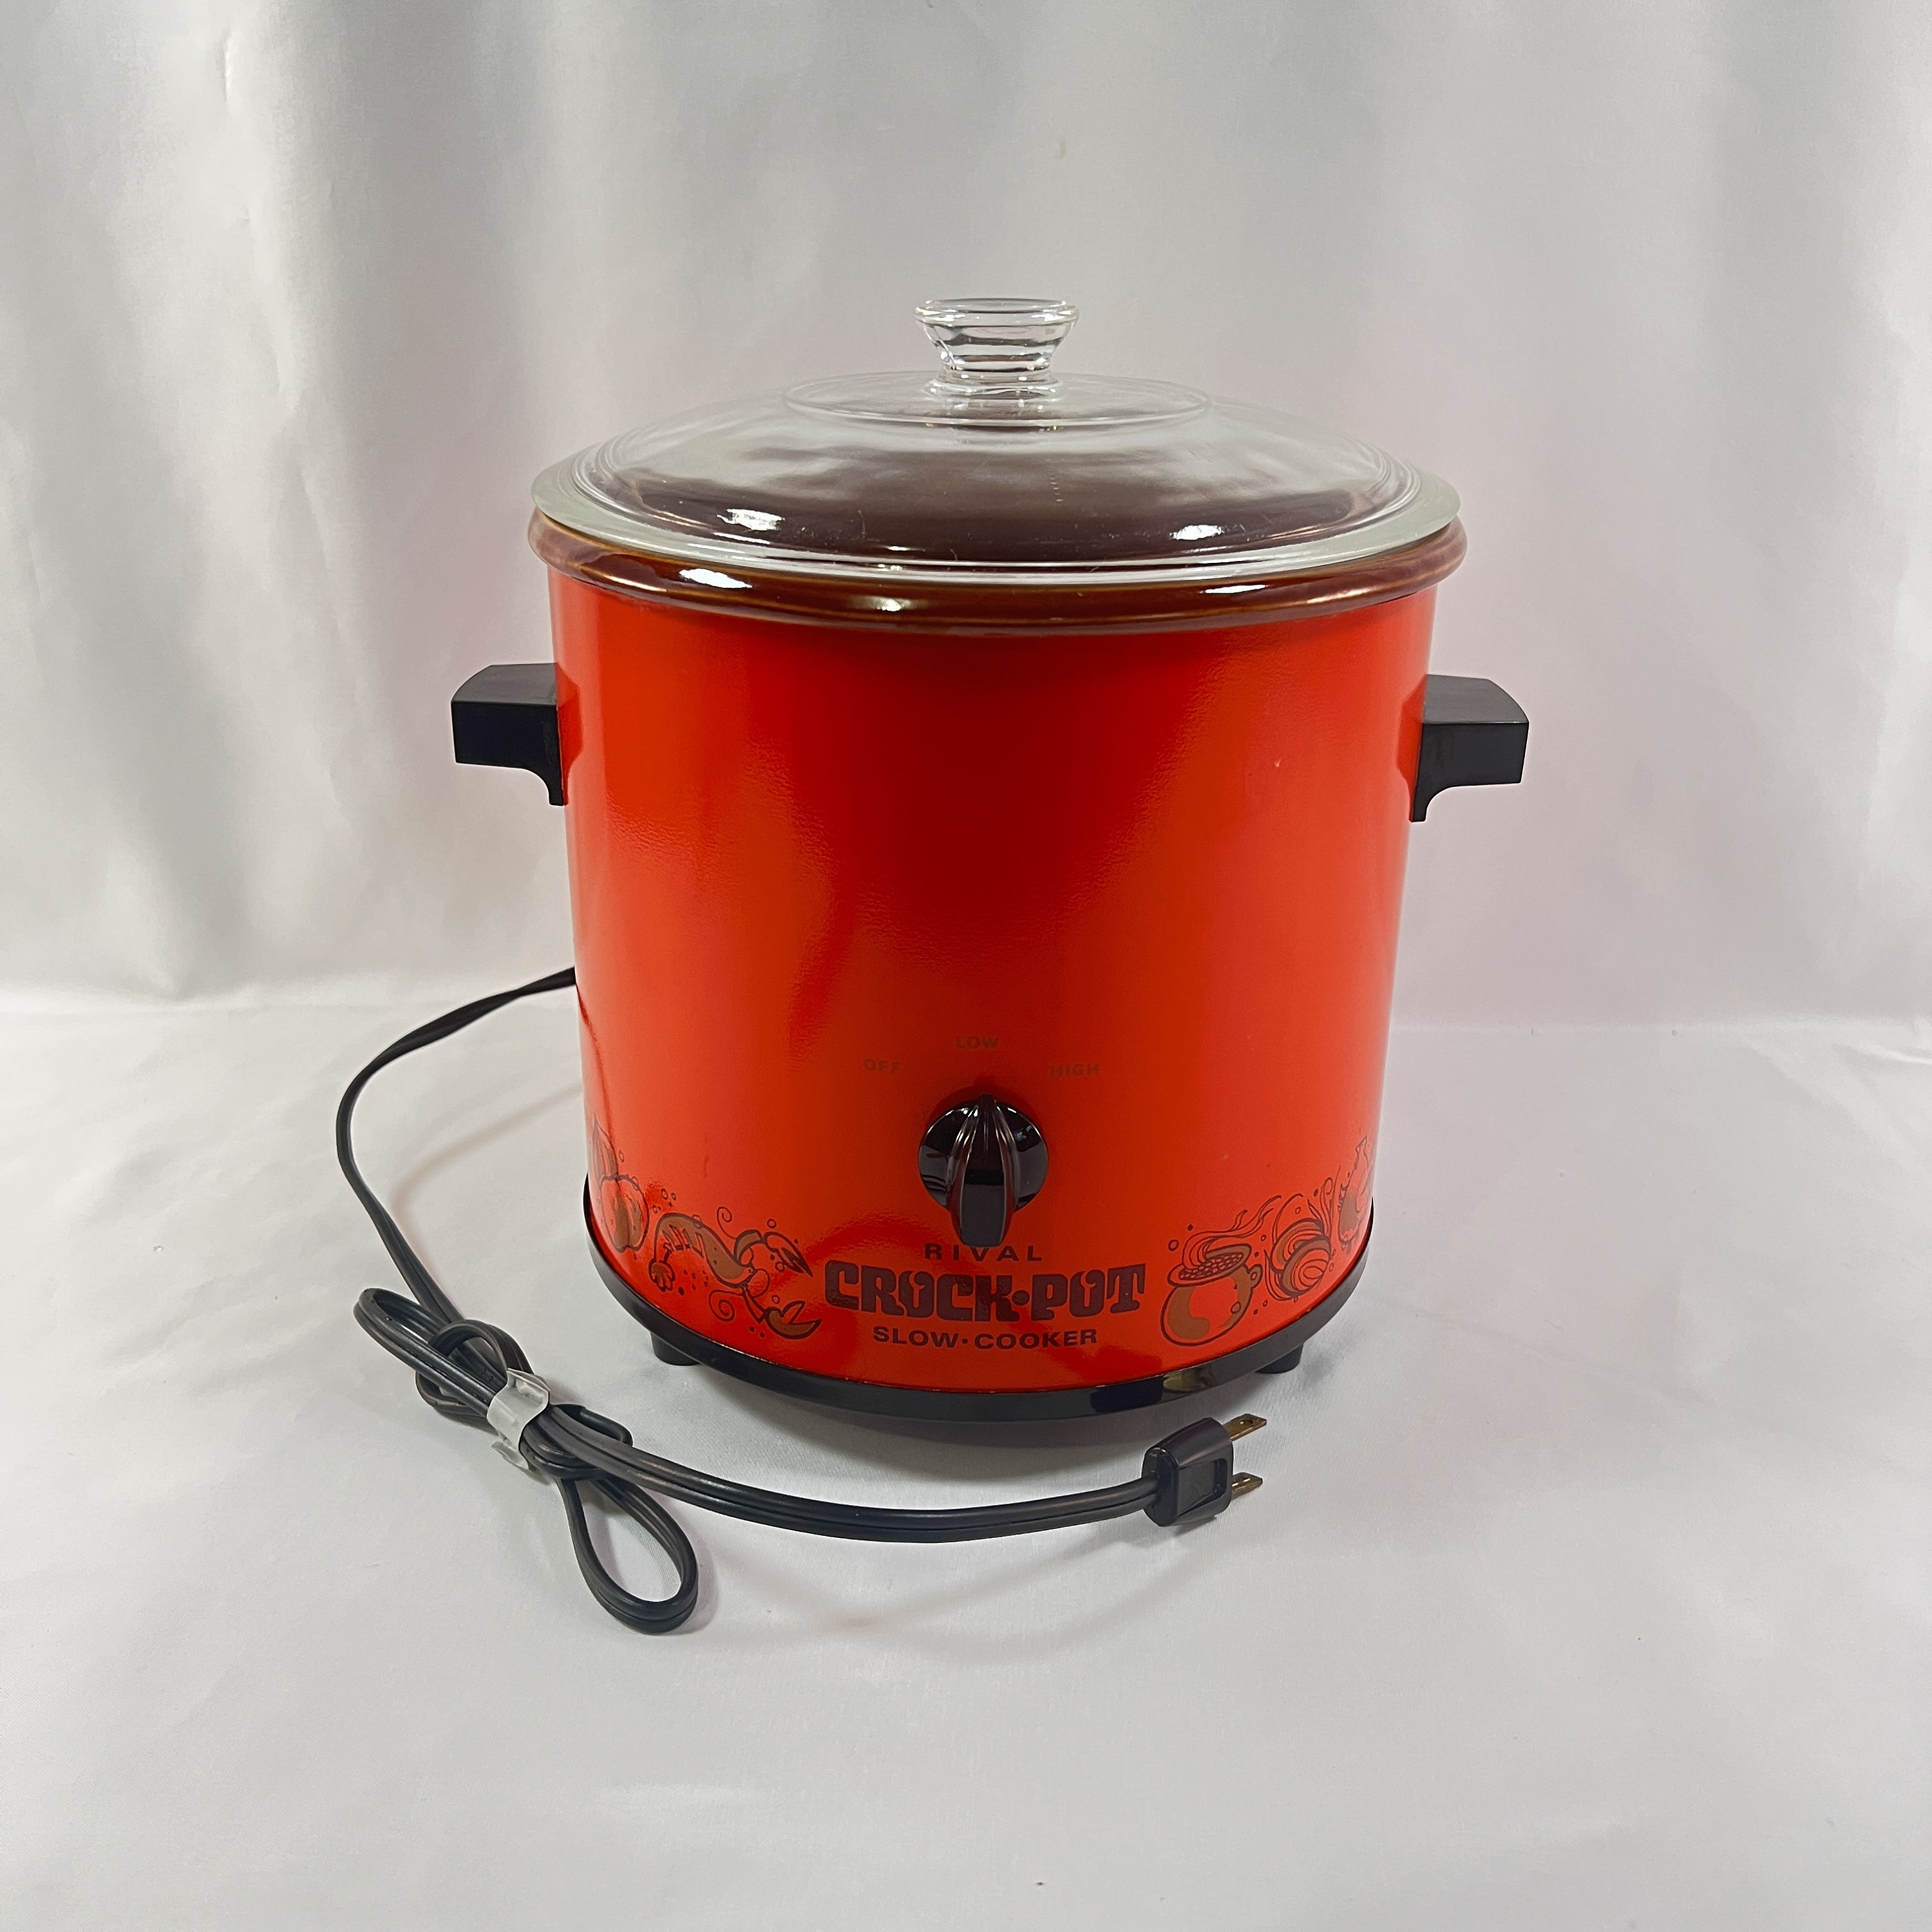 Rival Crockpot Stainless steel 4 1/2 Qt black stoneware Slow Cooker Pot